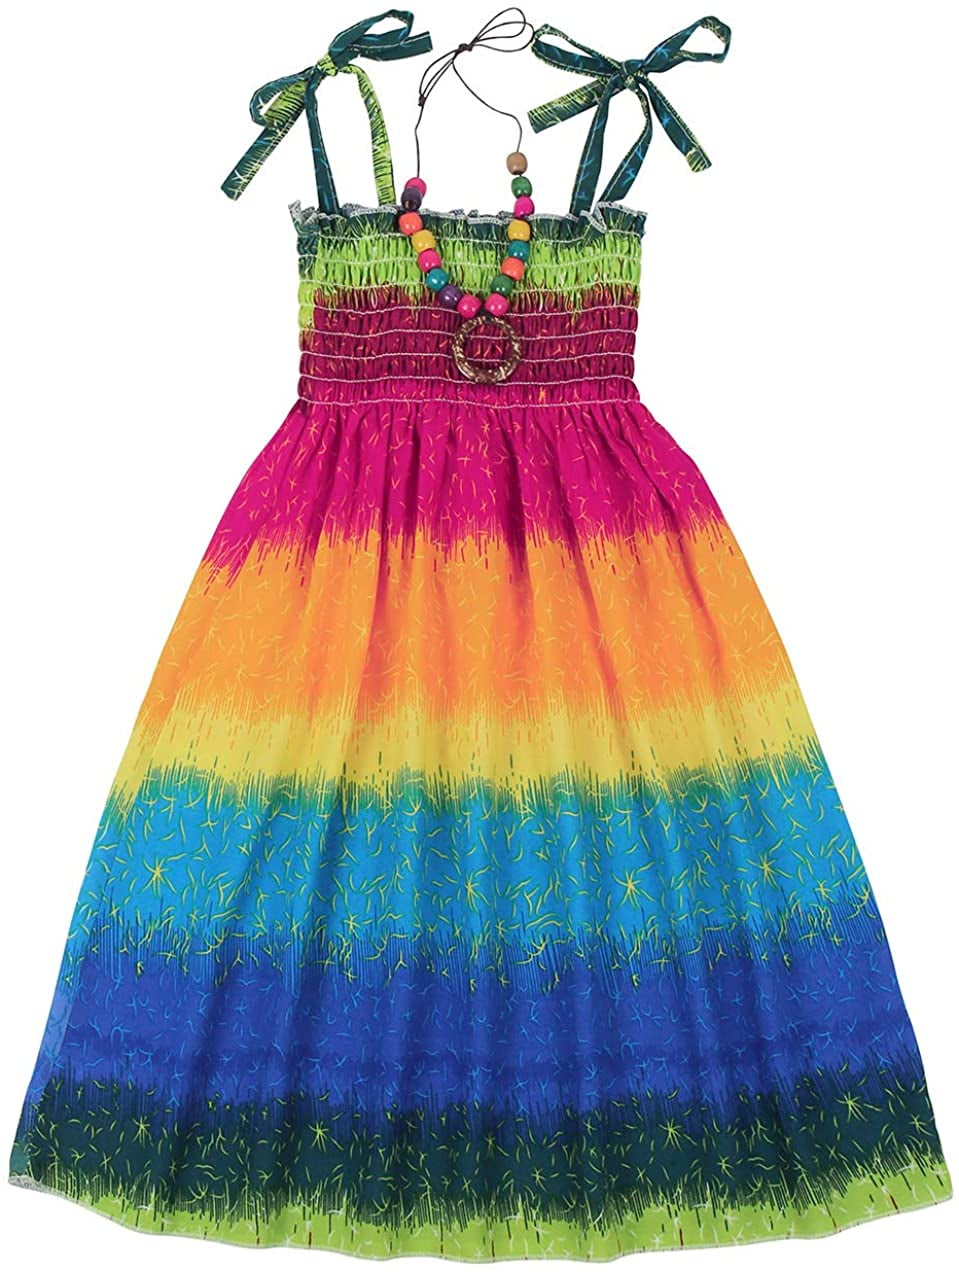 AmzBarley Girls Flowers Sundress Floral Retro Vintage Bohemian Summer Sun Dress Kids Sleeveless Boho Slip Dresses